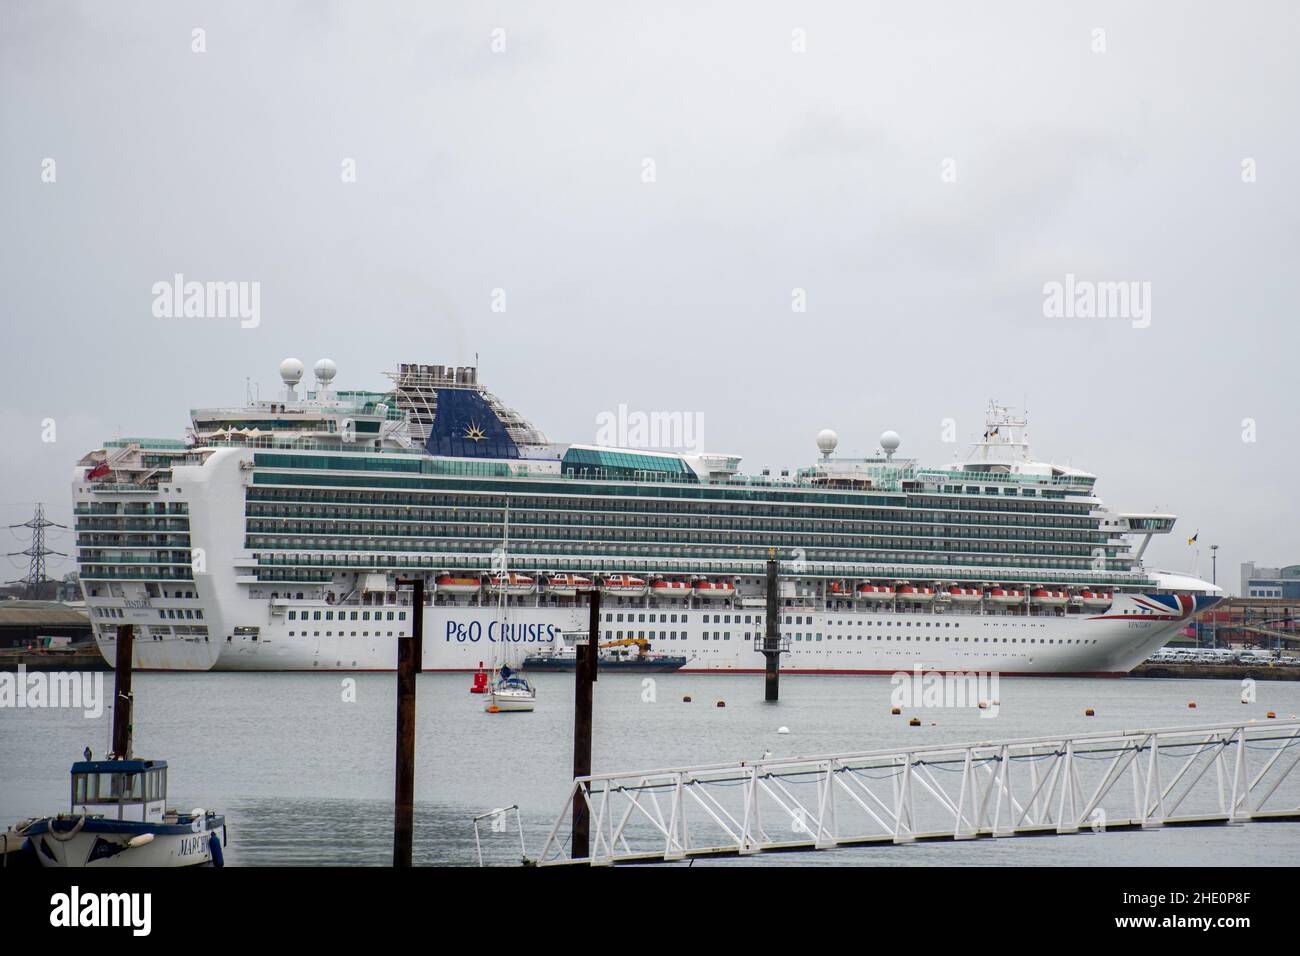 P&O Cruises ship named Ventura docked at the Port of Southampton during January 2021, Hampshire, England, UK Stock Photo